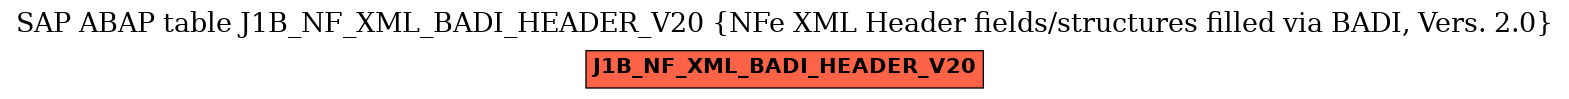 E-R Diagram for table J1B_NF_XML_BADI_HEADER_V20 (NFe XML Header fields/structures filled via BADI, Vers. 2.0)